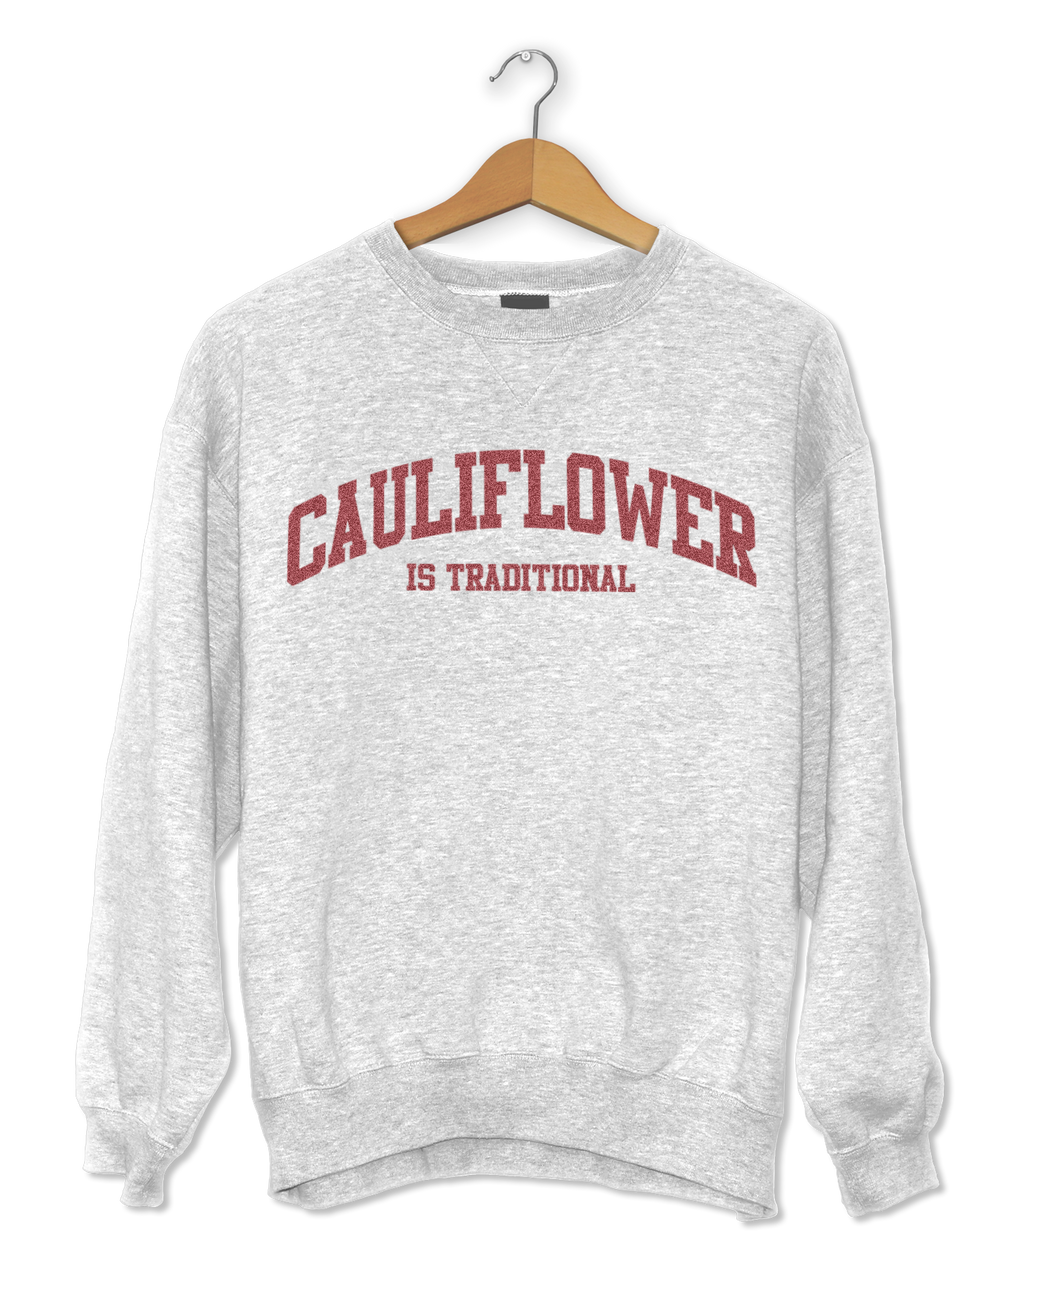 CAULIFLOWER IS TRADITIONAL - Sweater